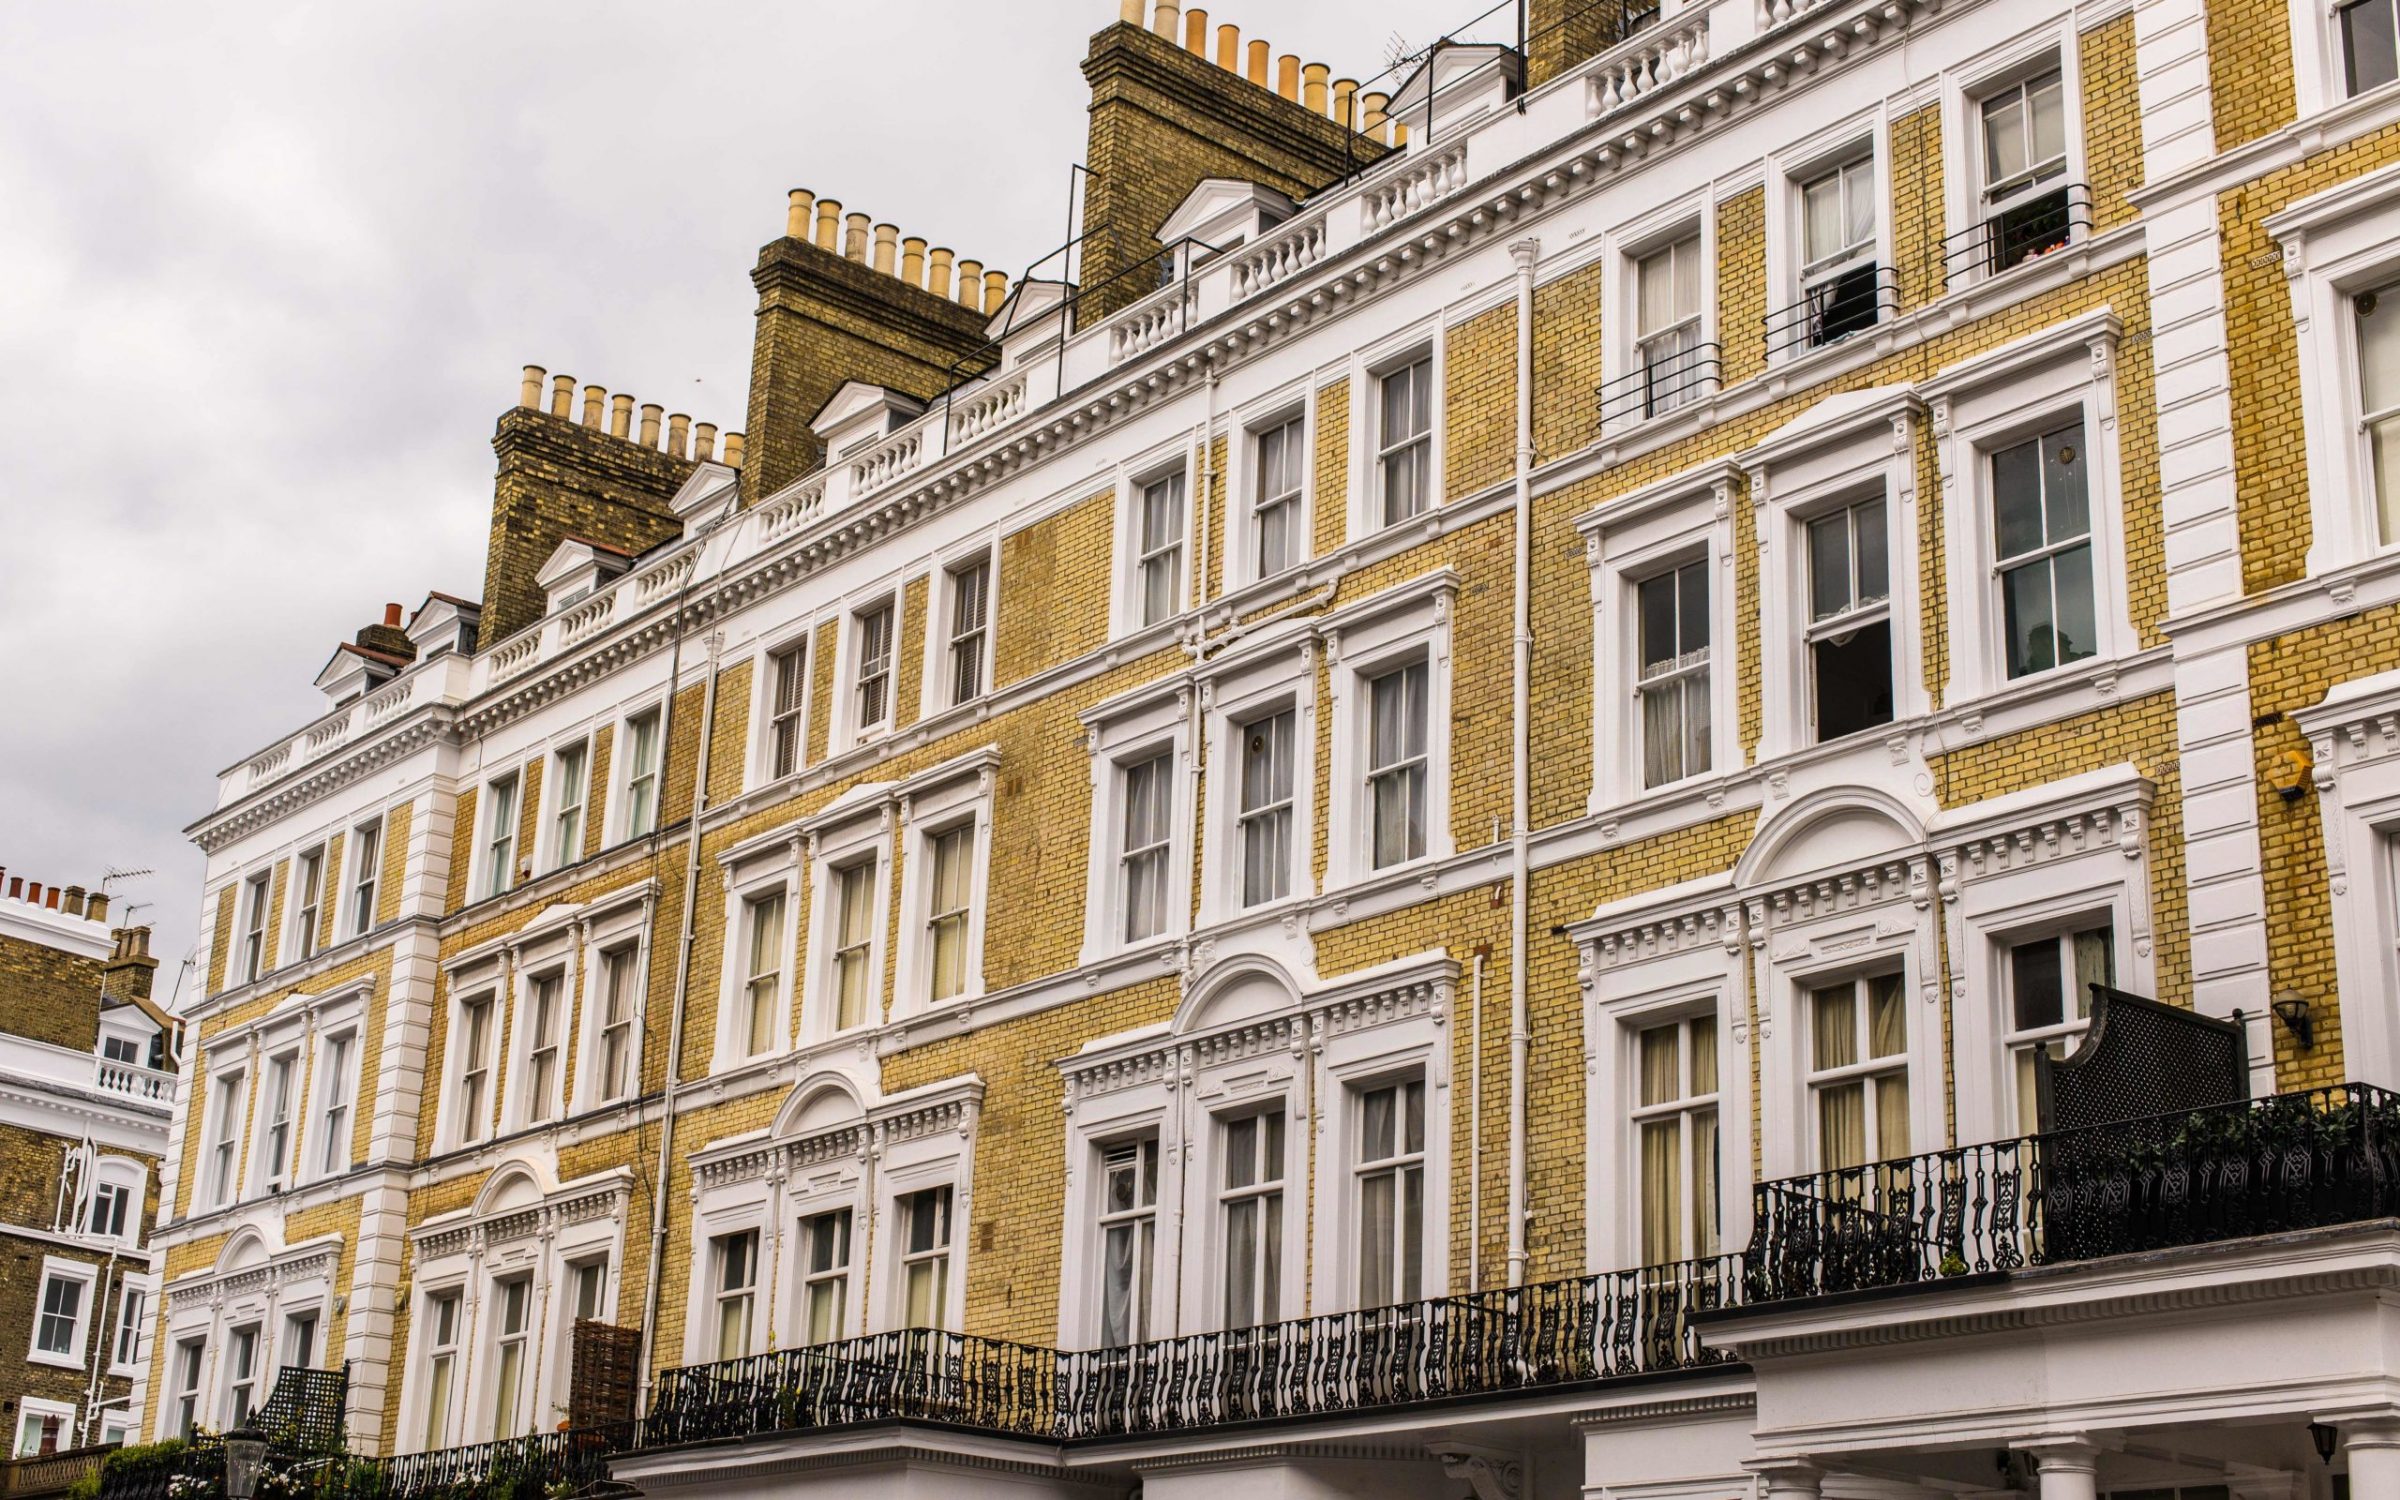 Facade of an opulent British Victorian Edwardian terraced flat in South Kensington, London.